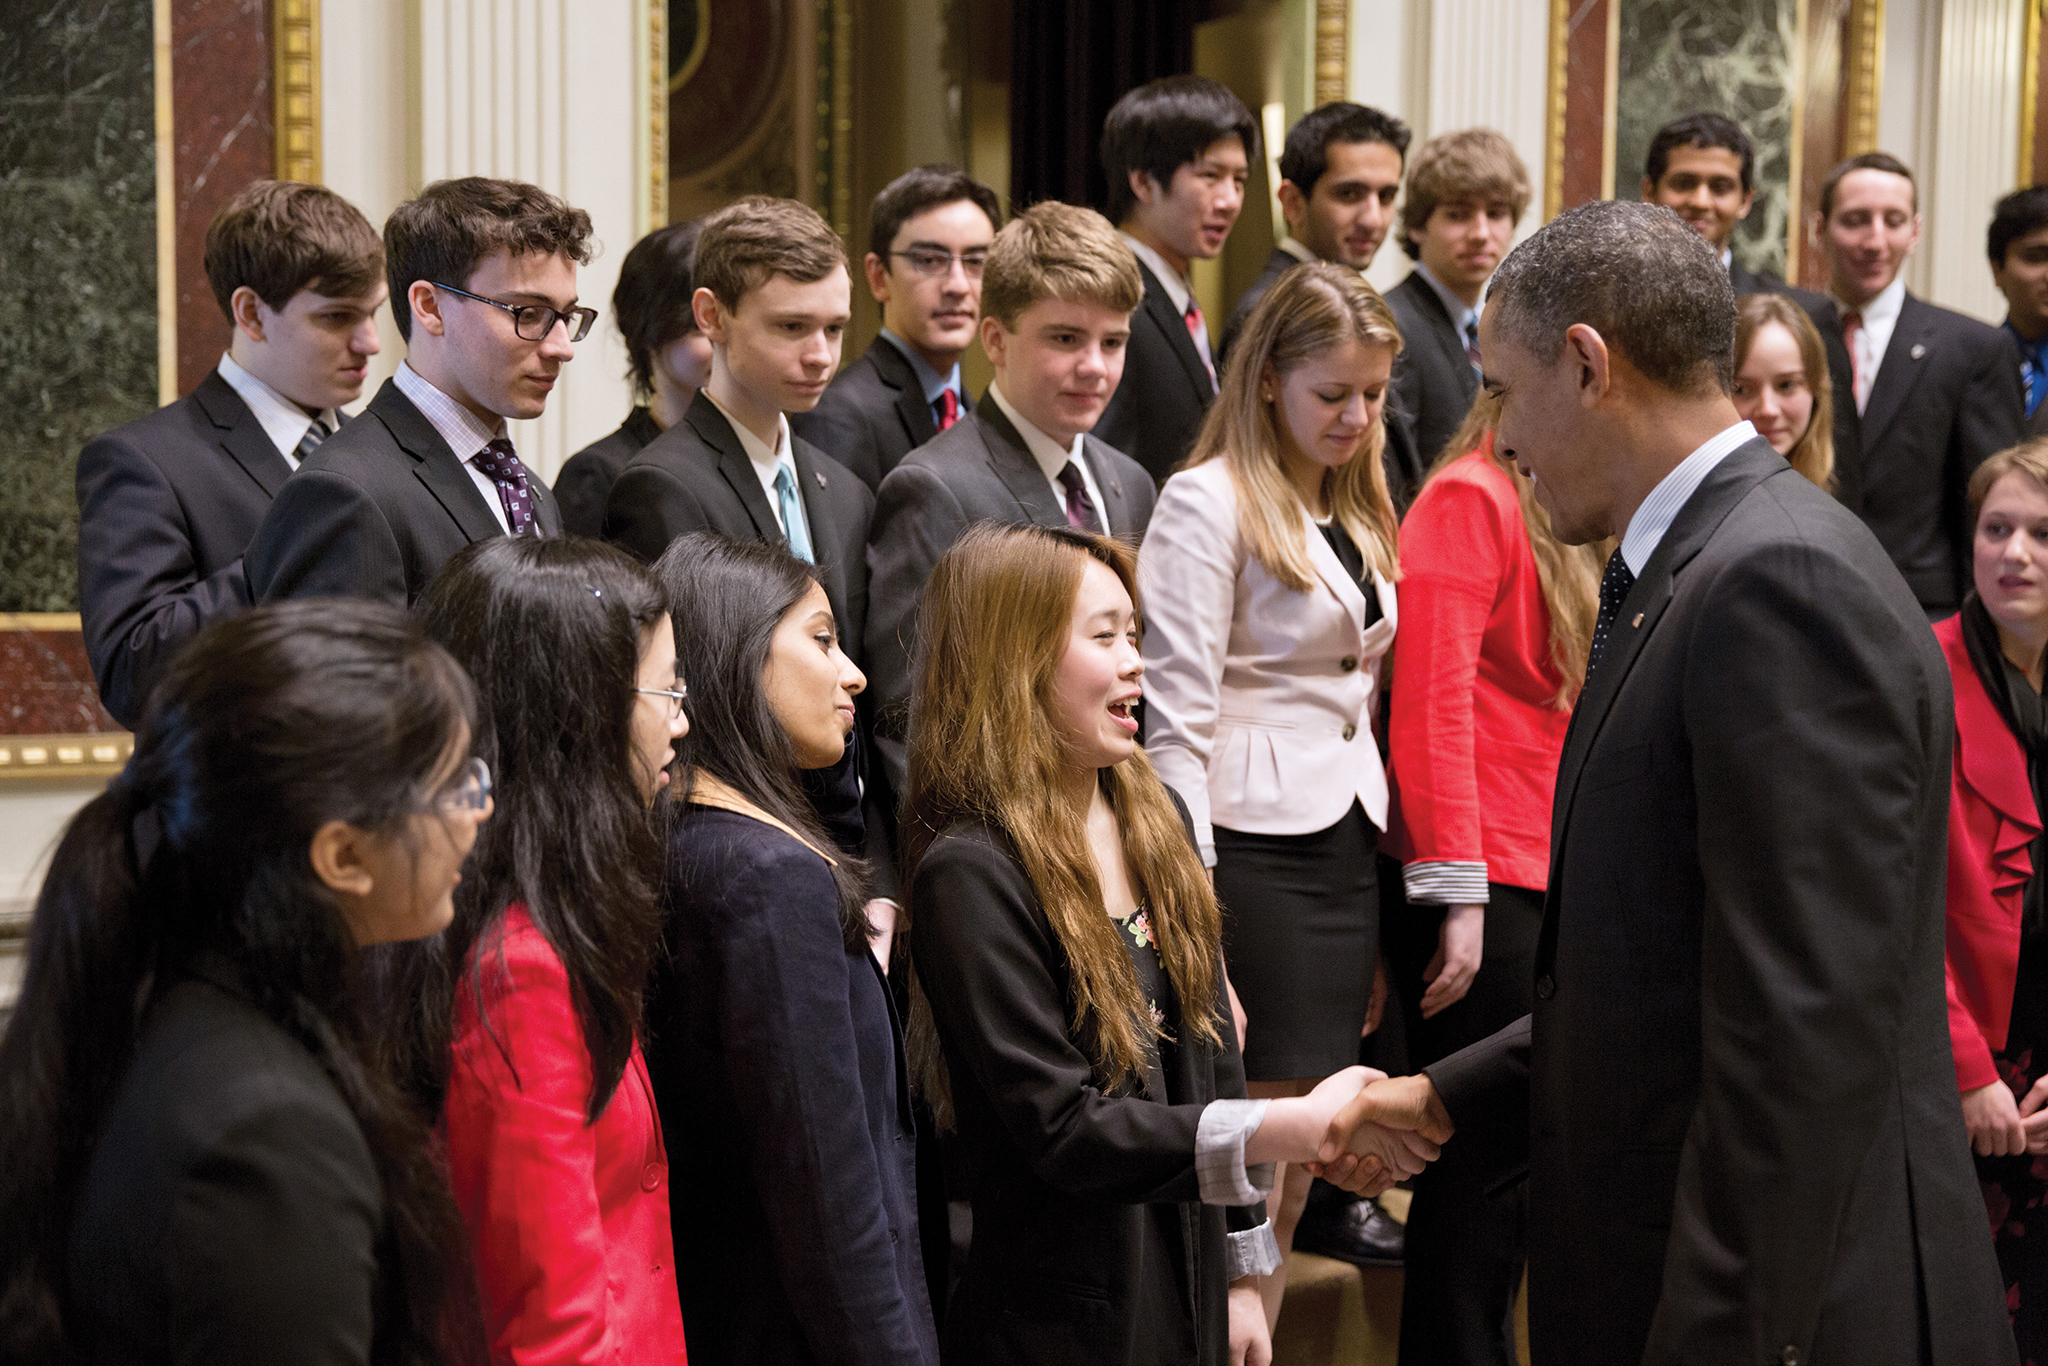 STS finalist Jennifer Chan meets President Obama